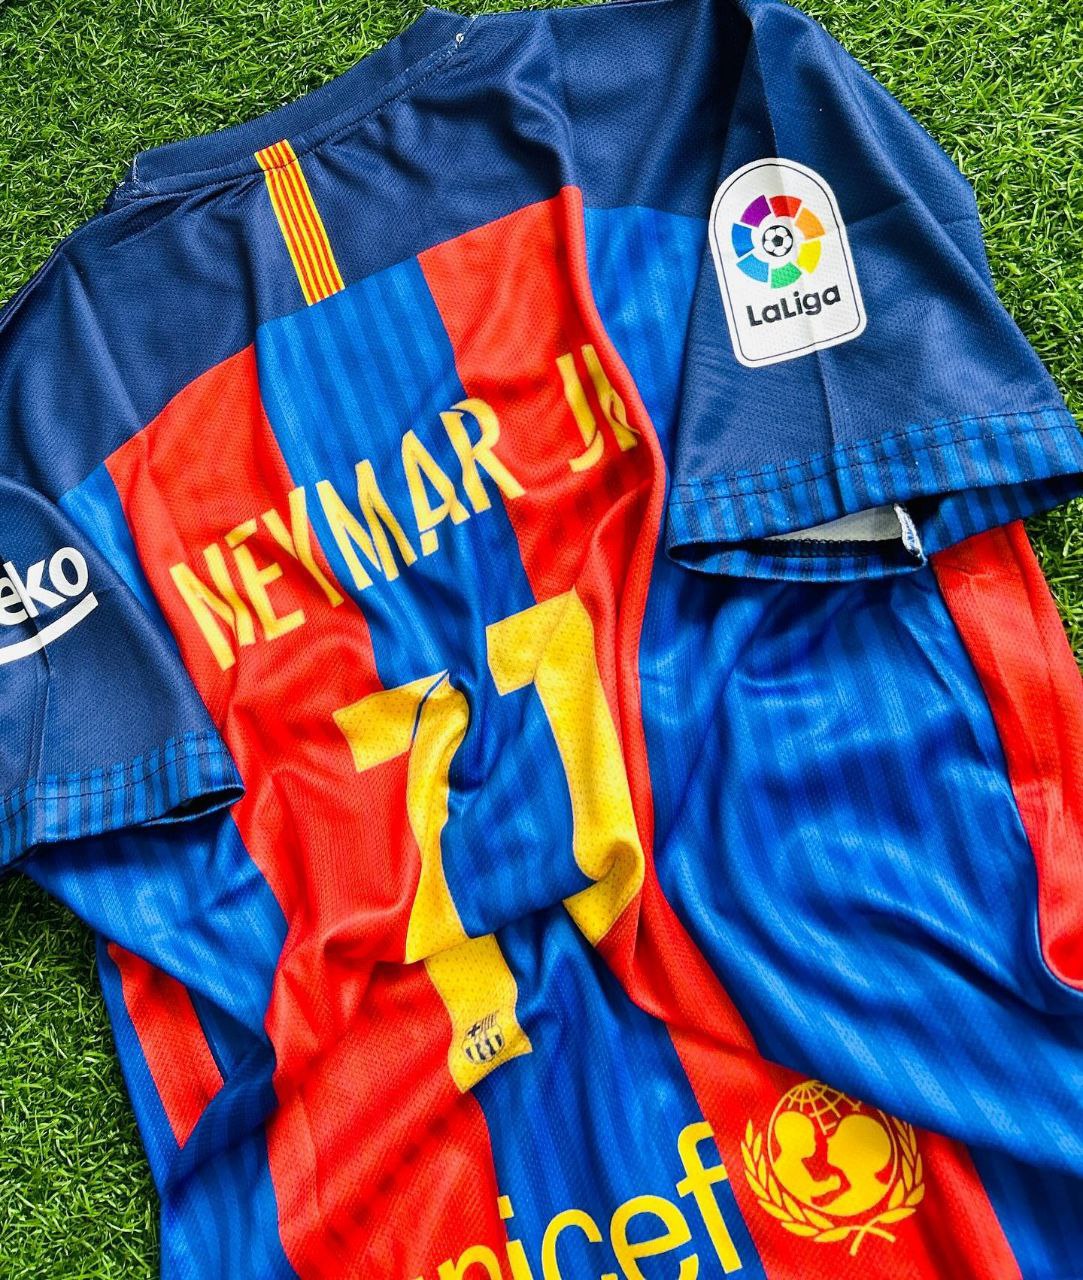 Neymar Jr. Barcelona Retro-Trikot